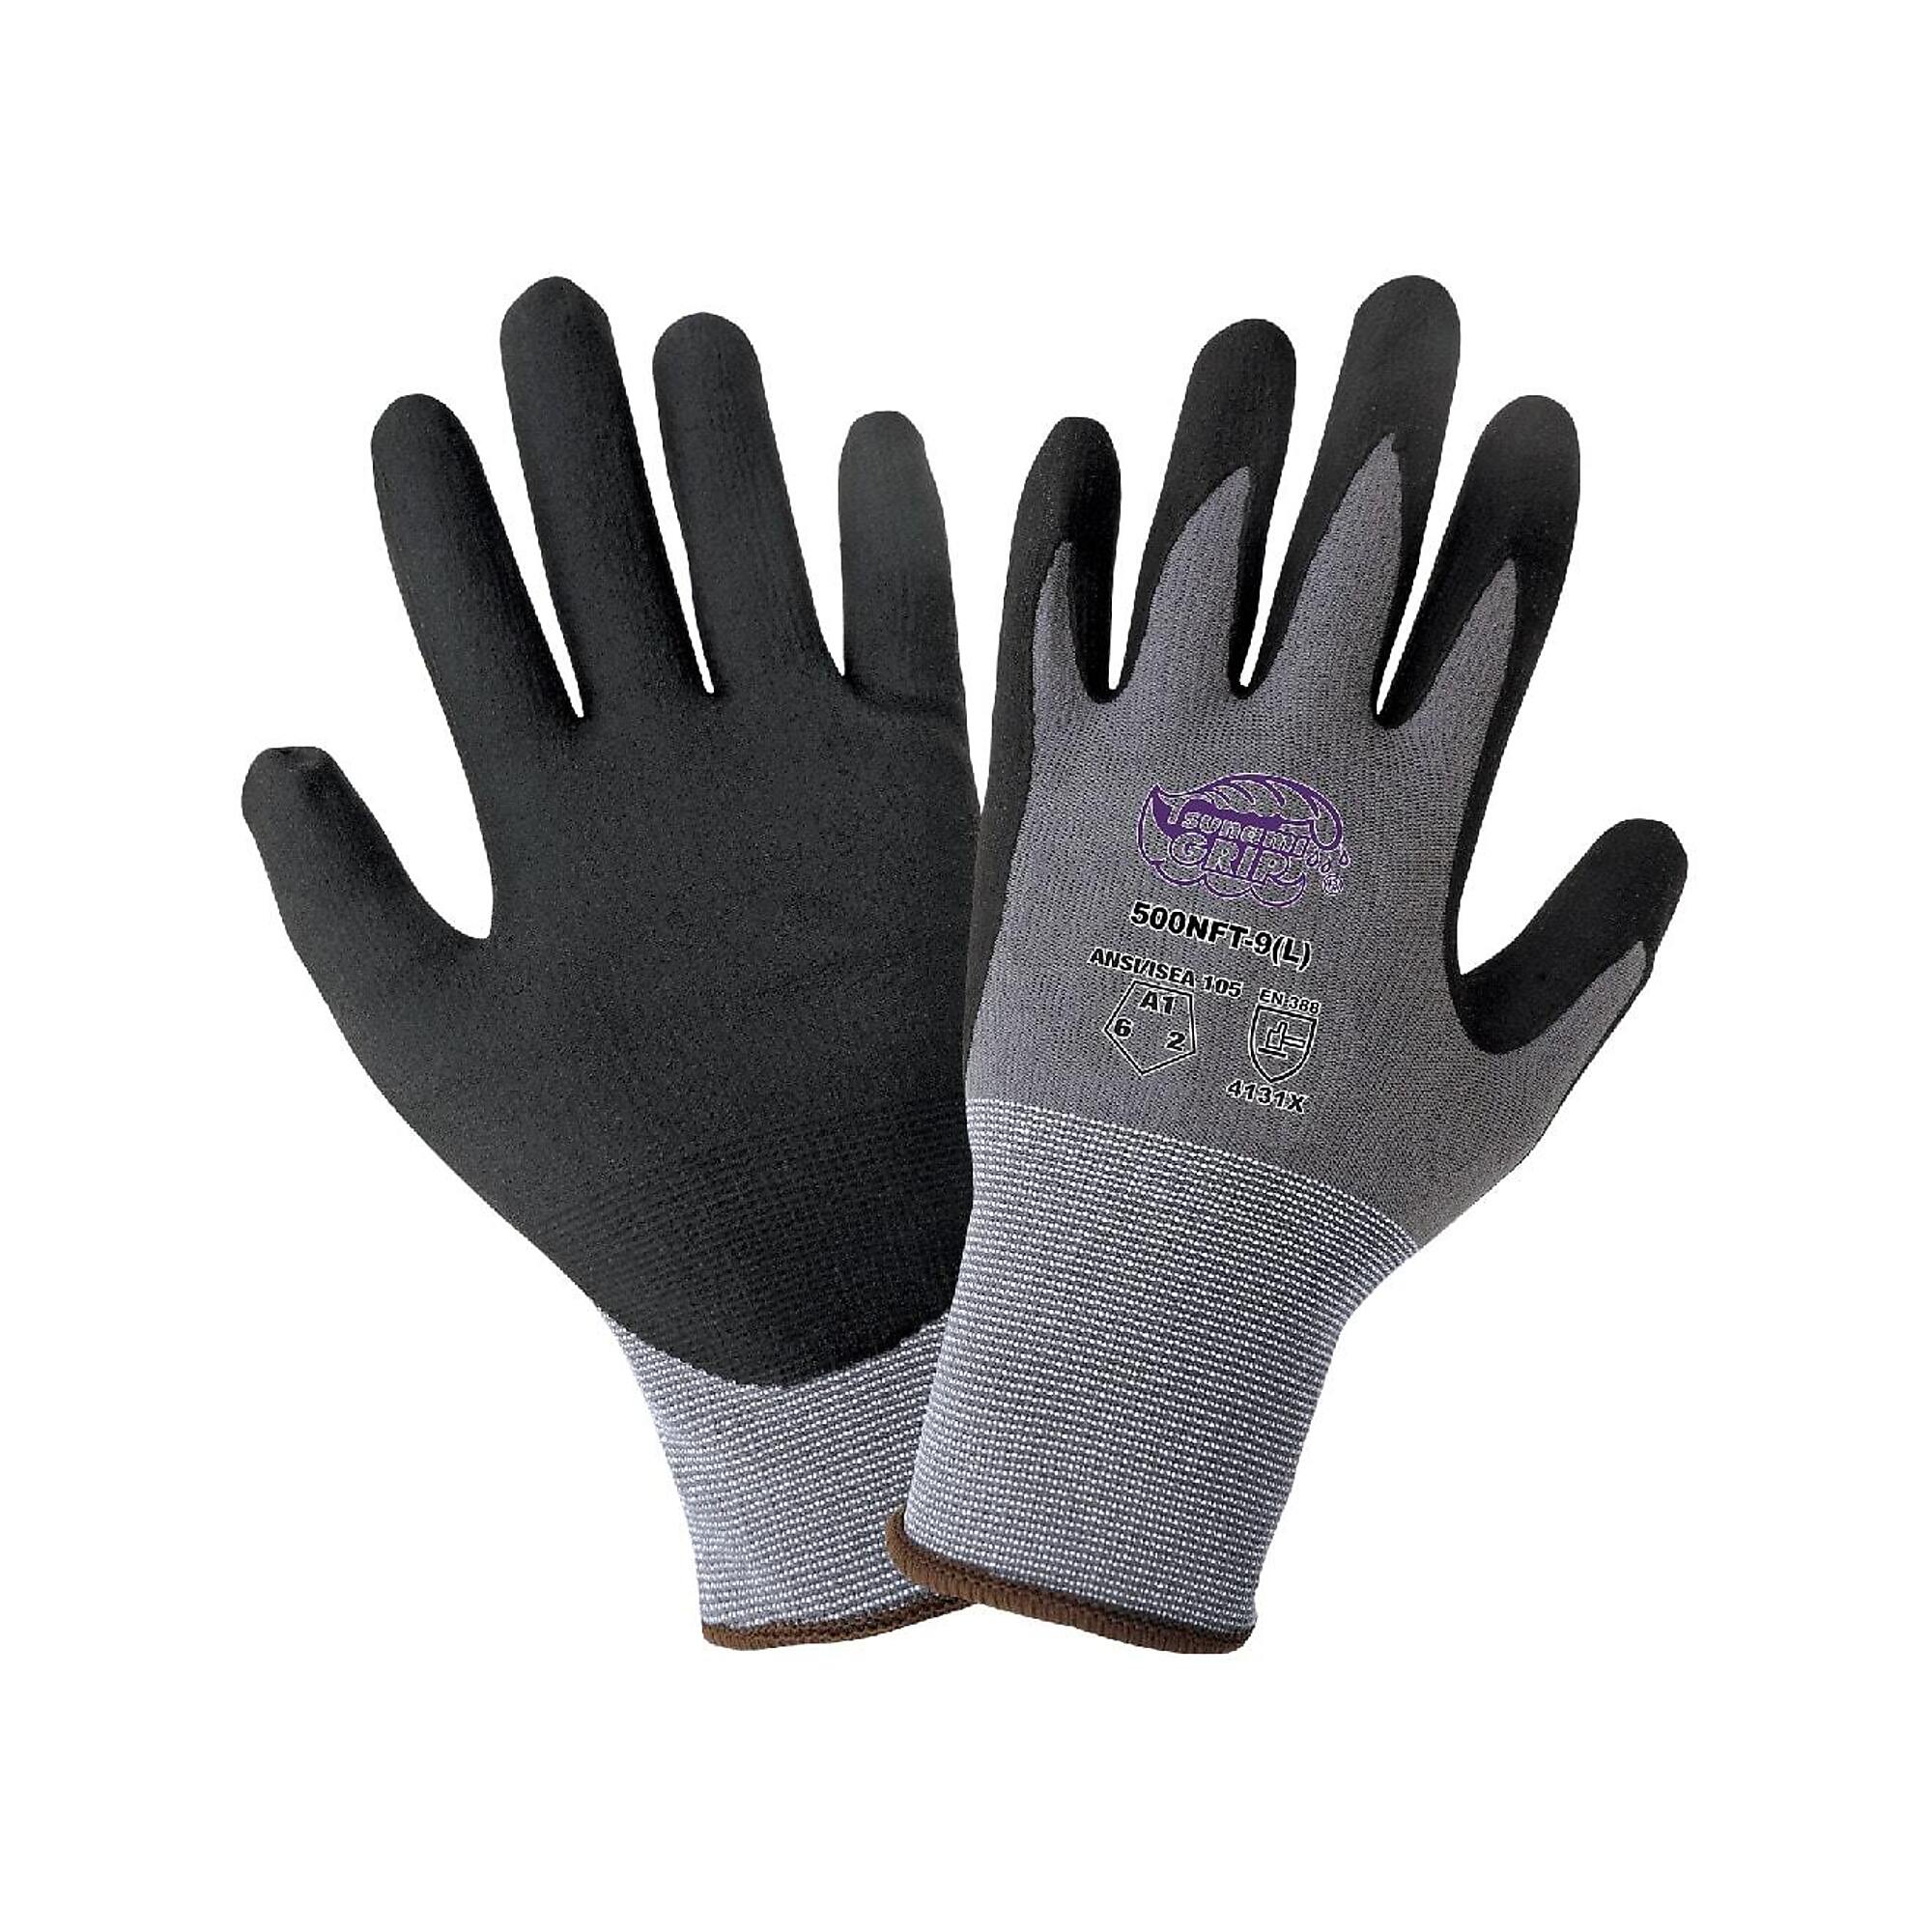 Global Glove Tsunami Grip , Gray, Black Nitrile Foam Palm, Cut Resist A1 Gloves- 12 Pair, Size M, Color Gray/Black, Included (qty.) 12 Model 500NFT-8(